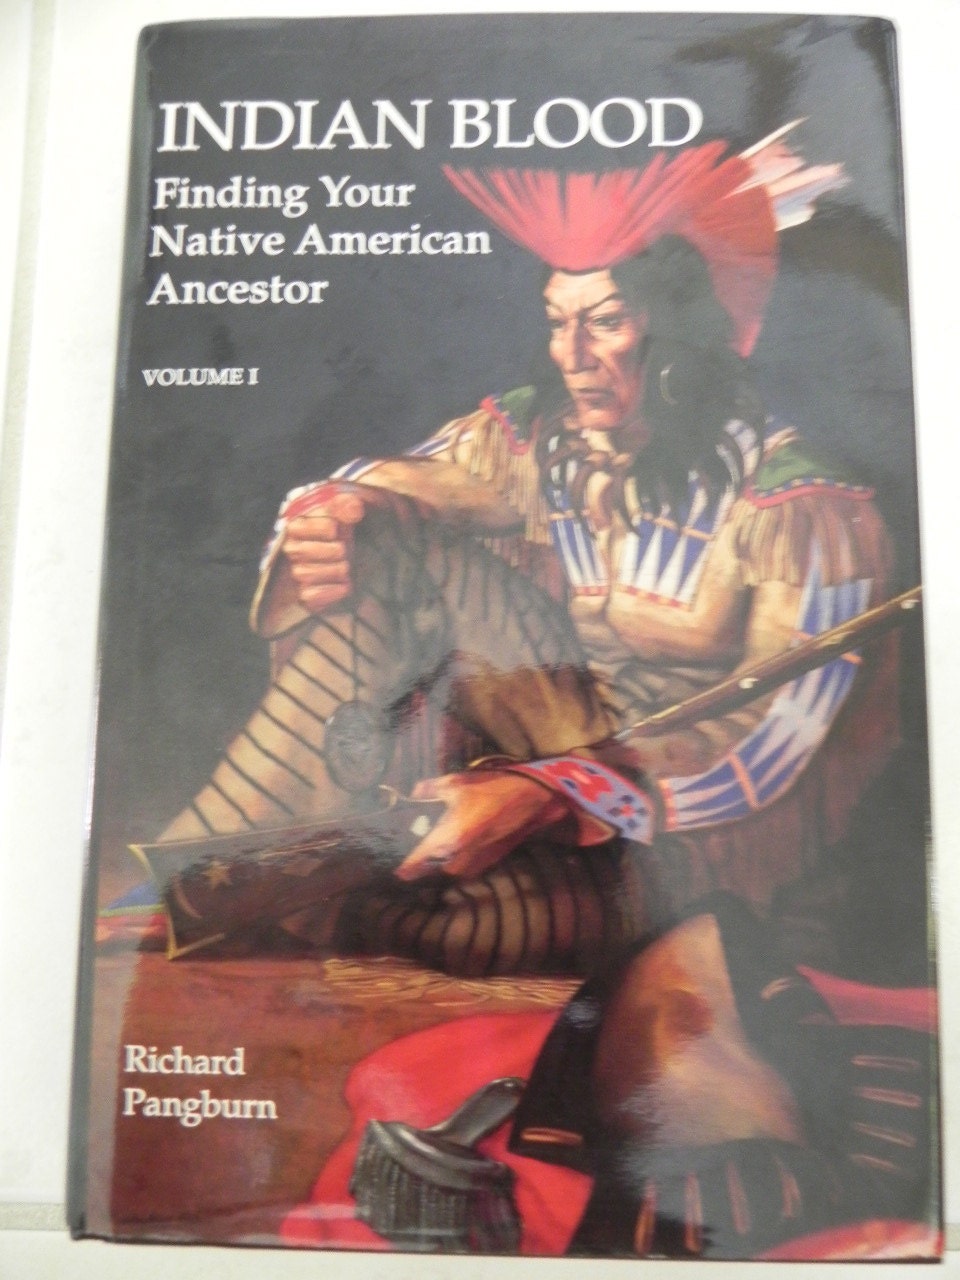 Indian Blood Finding Your Native American Ancestor Volume 1 by Richard Pangburn - baublesandblingforu